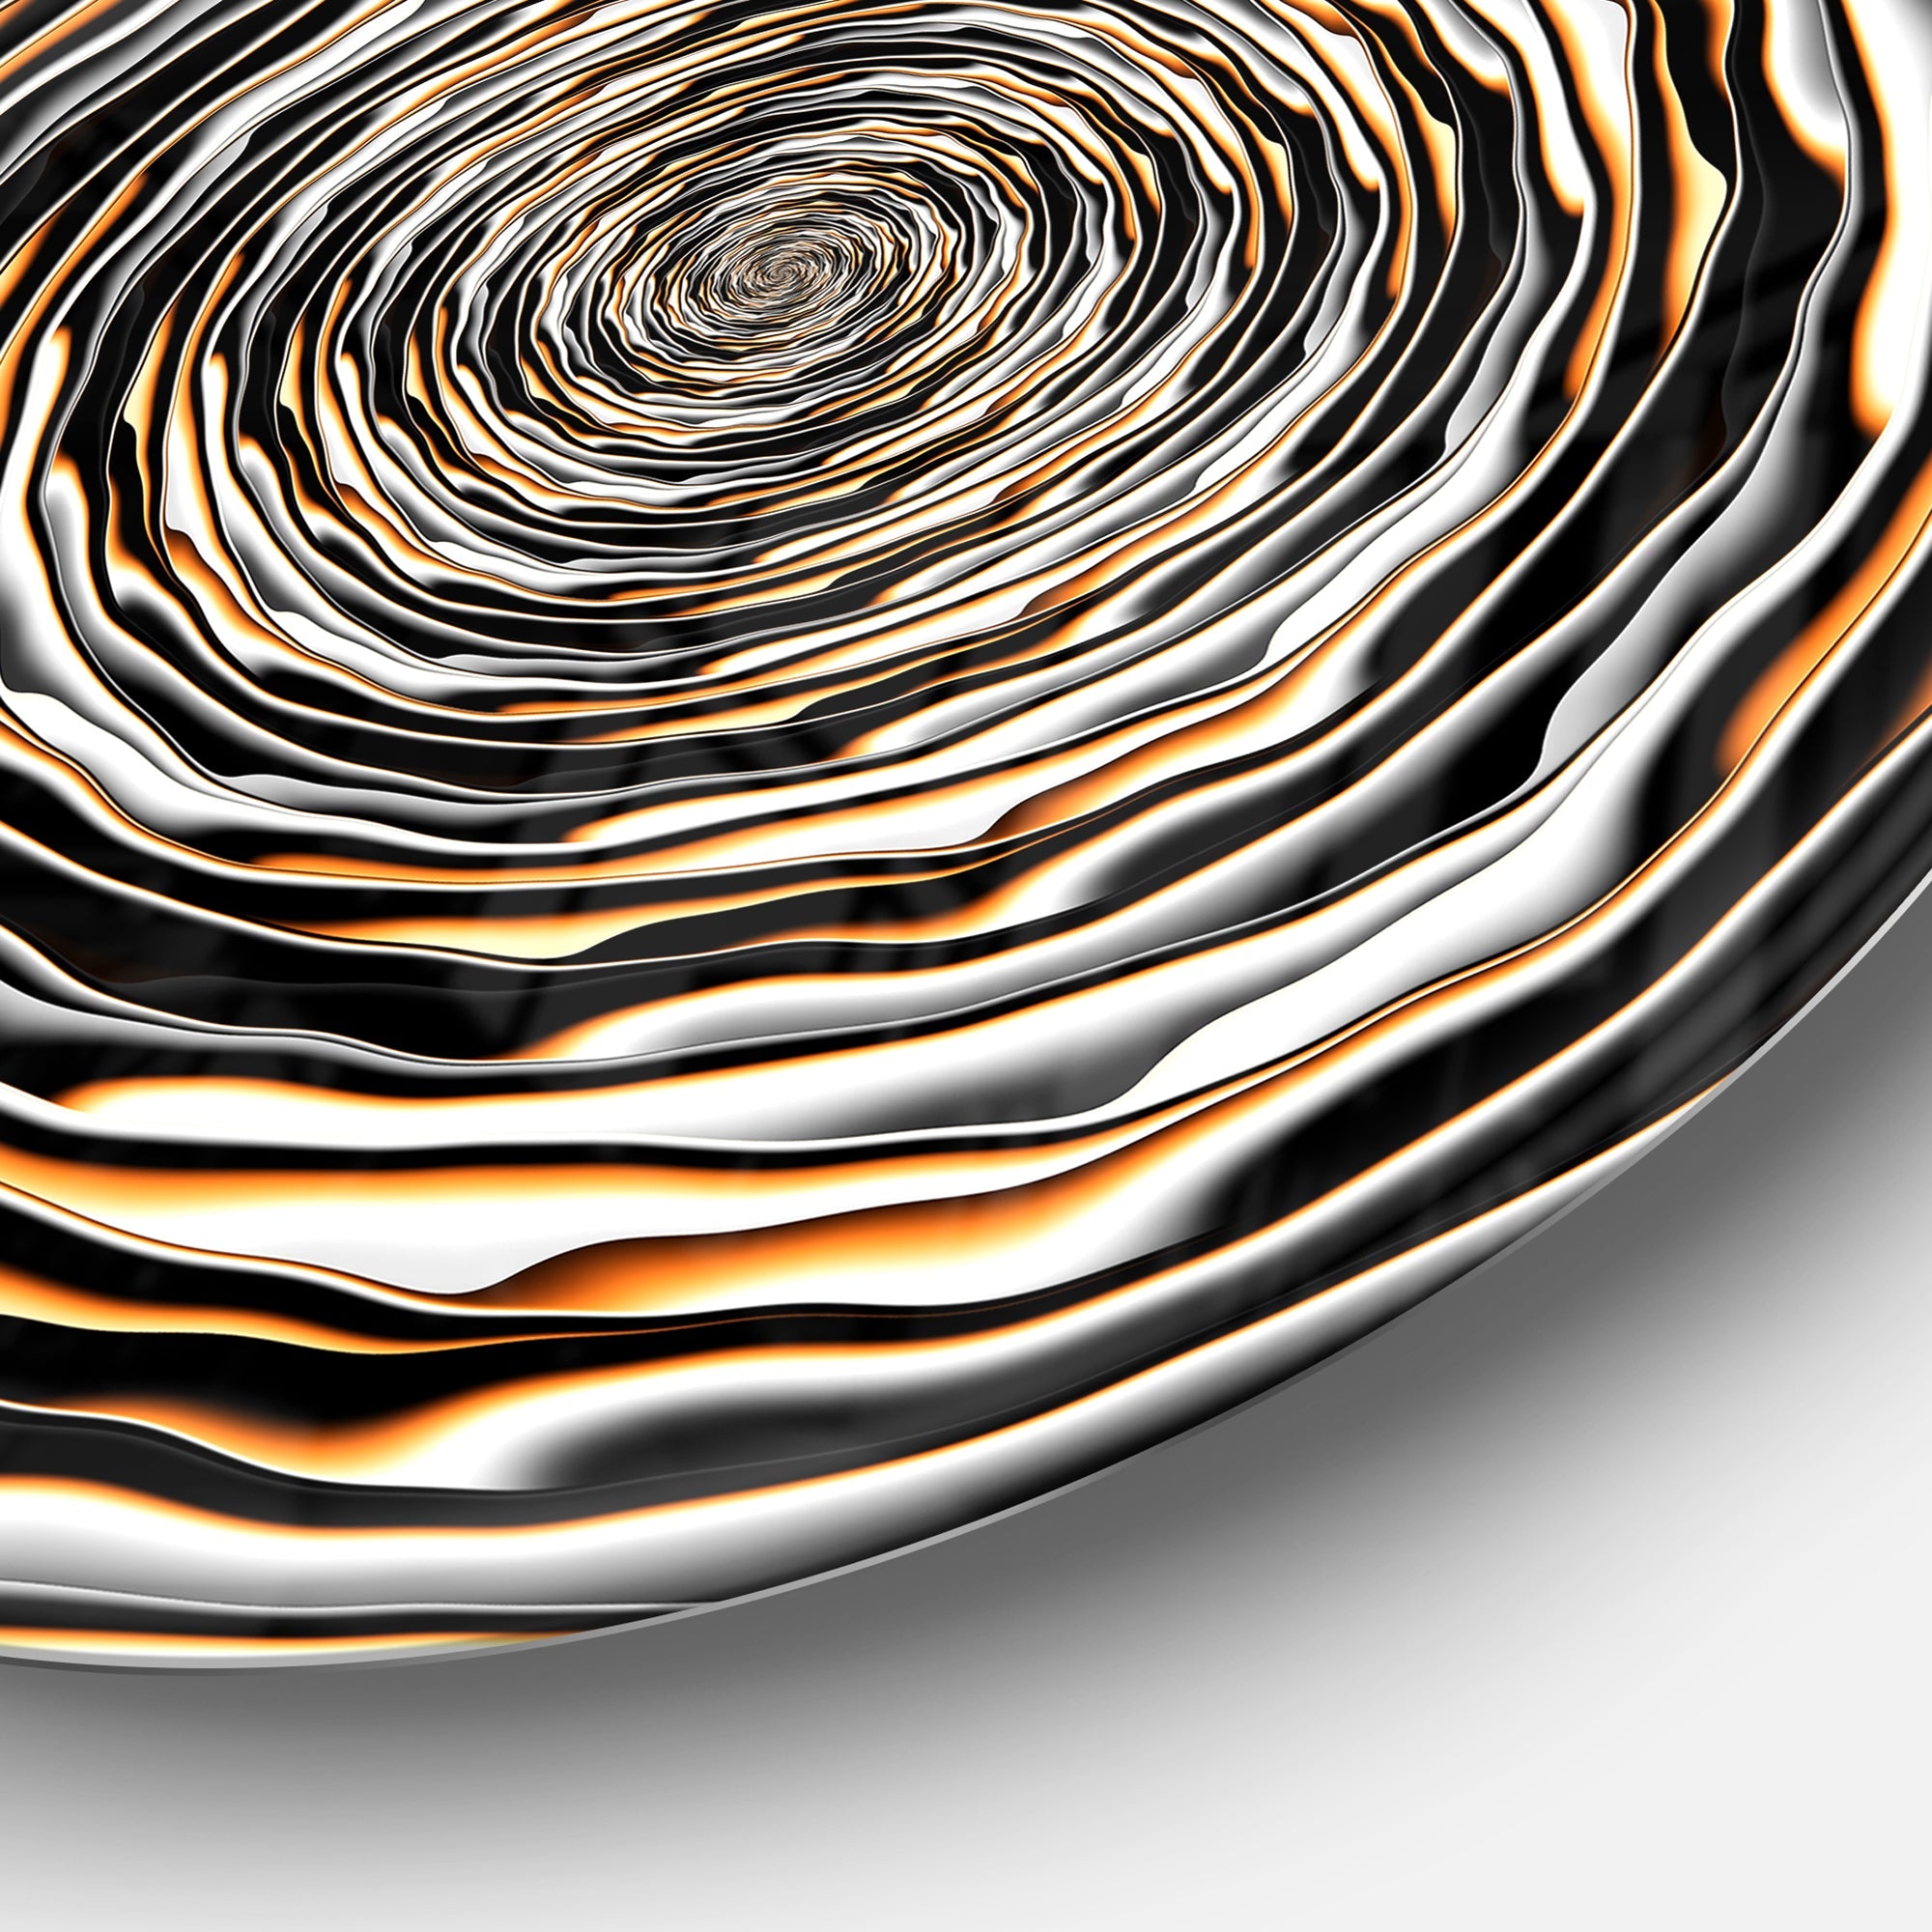 Fractal Rotating Abstract Design Large Abstract Metal Artwork